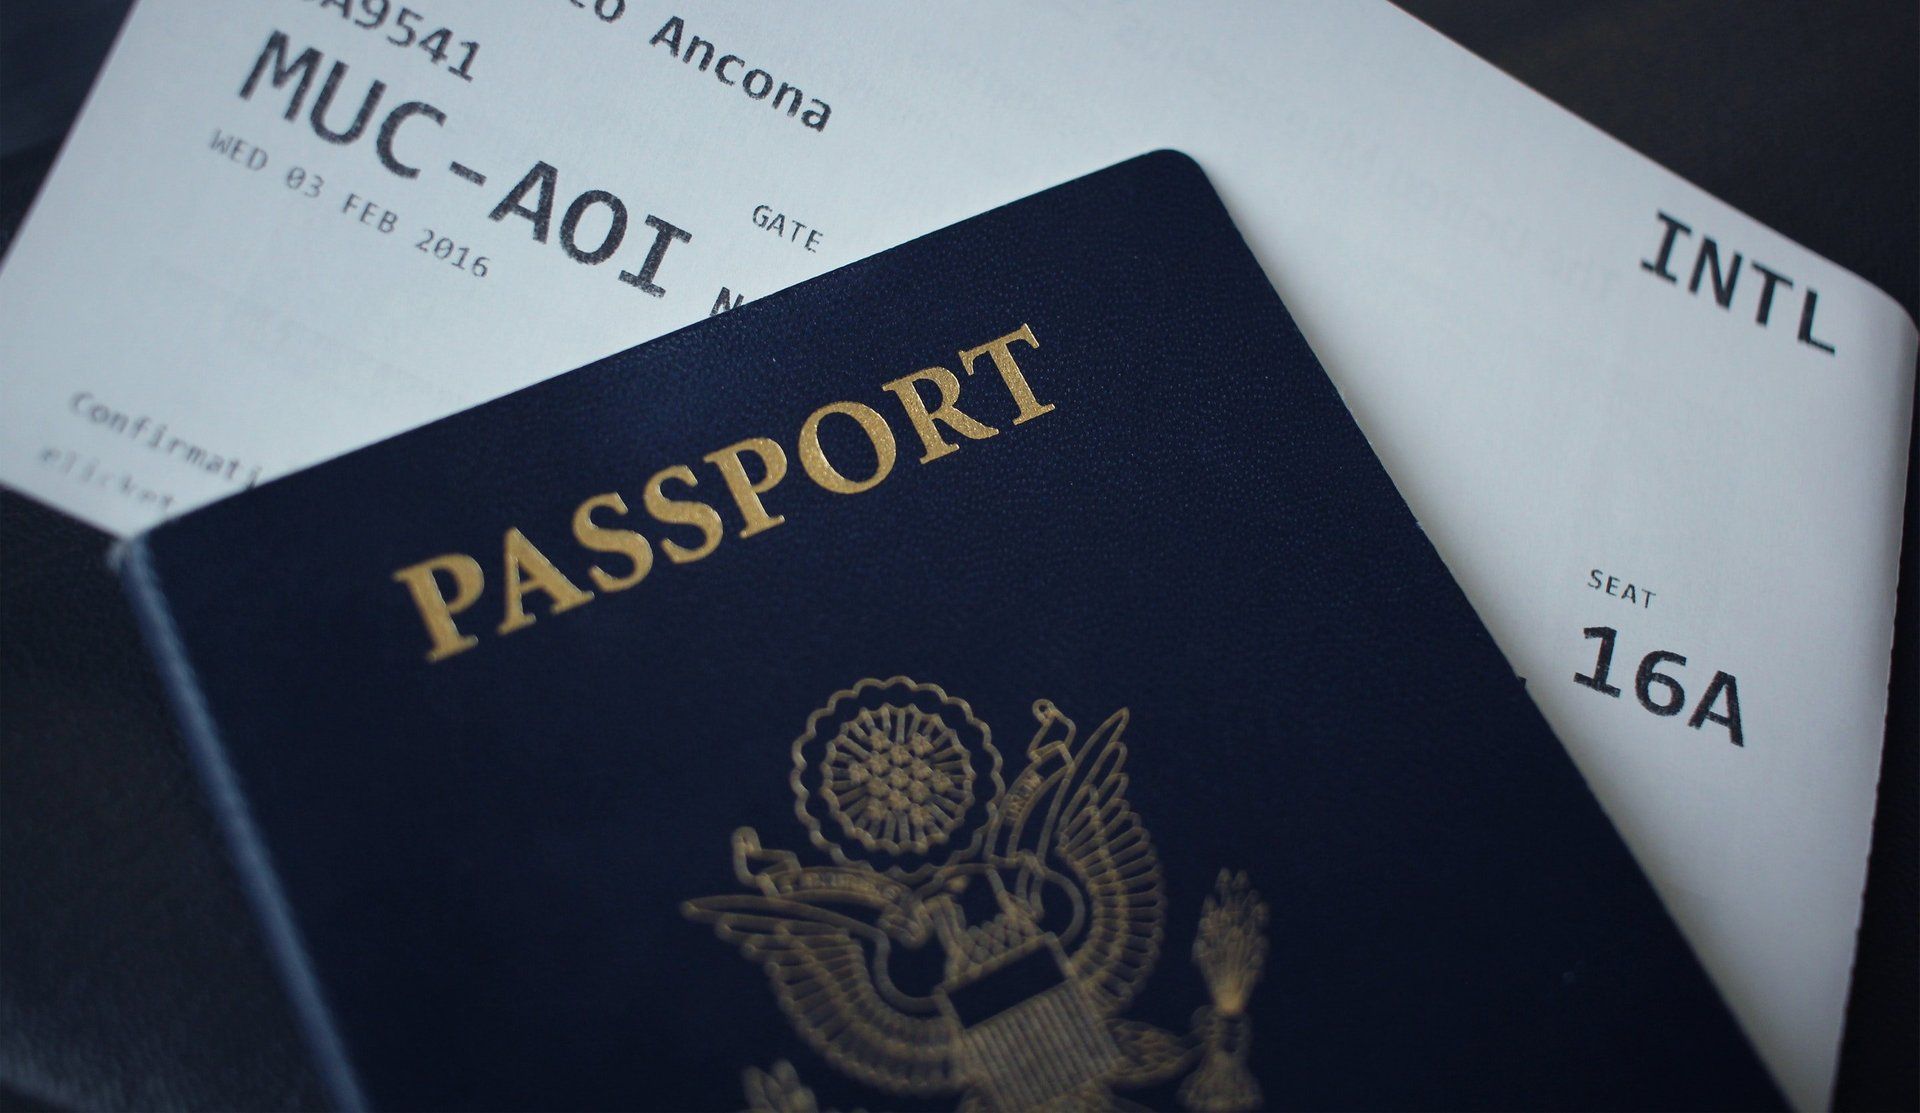 renew expired passport online